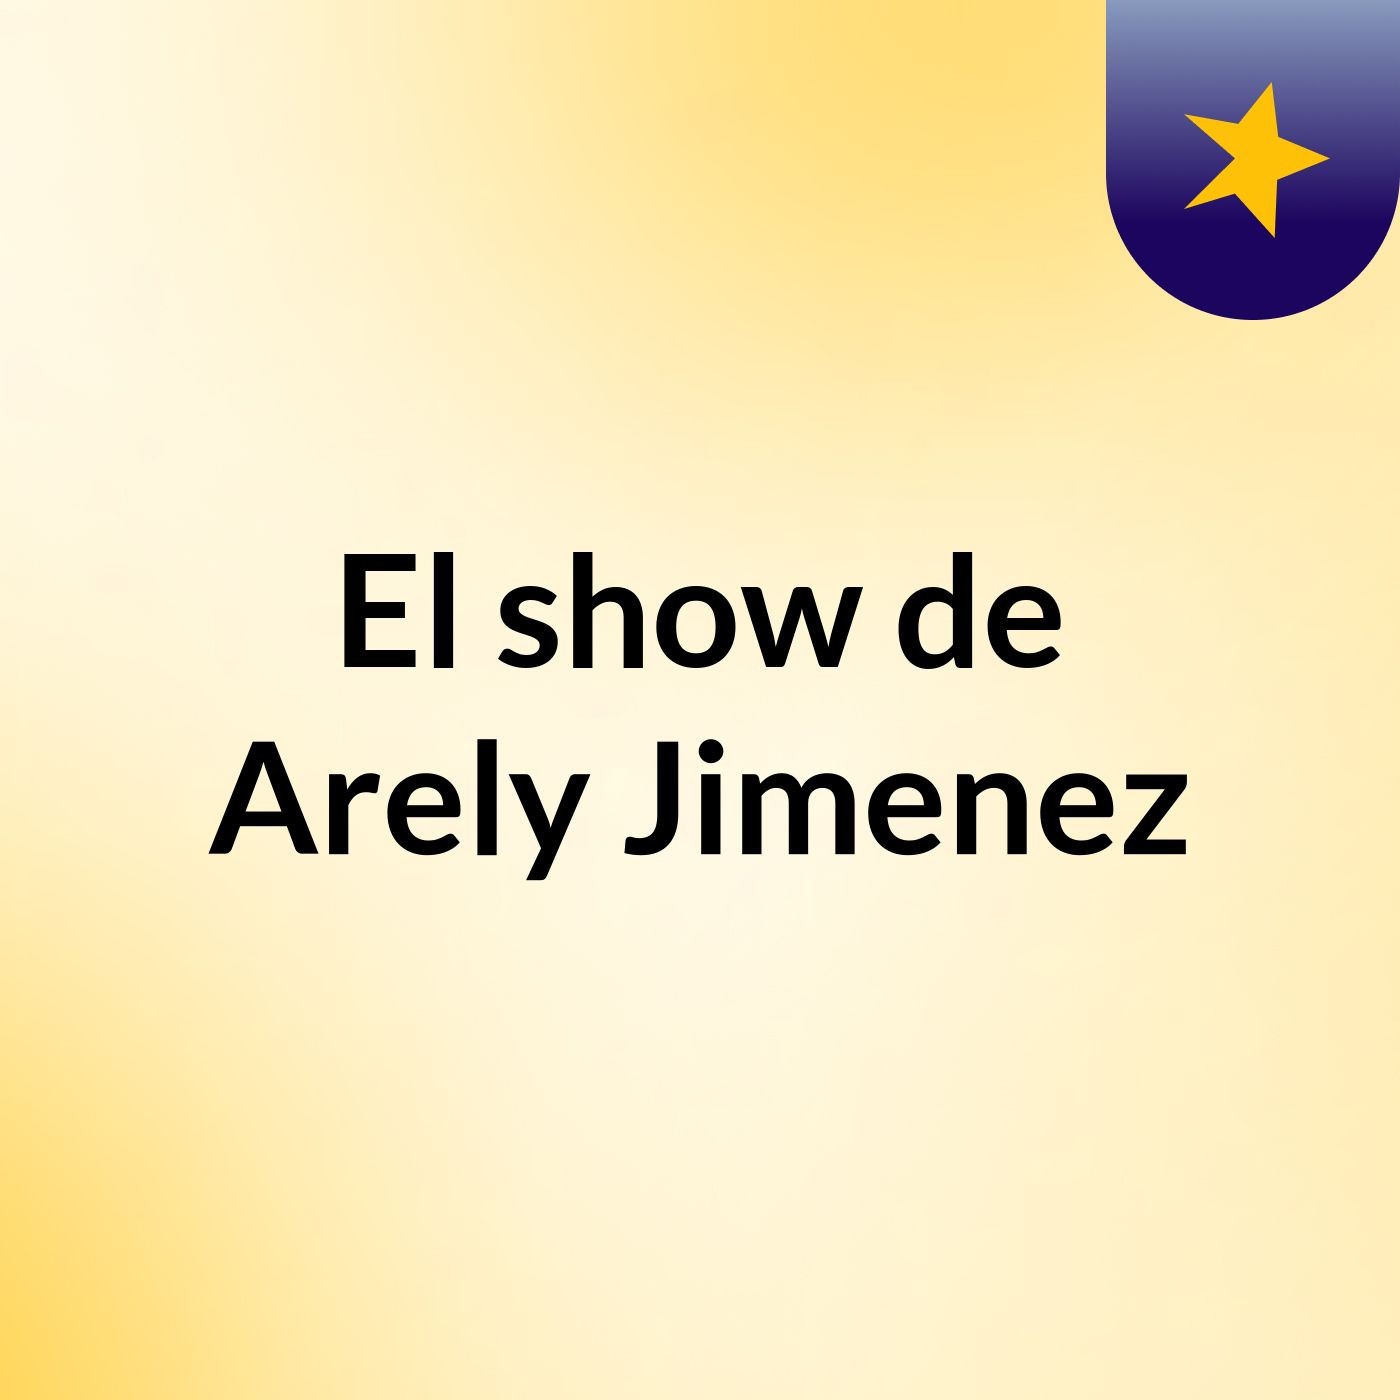 El show de Arely Jimenez